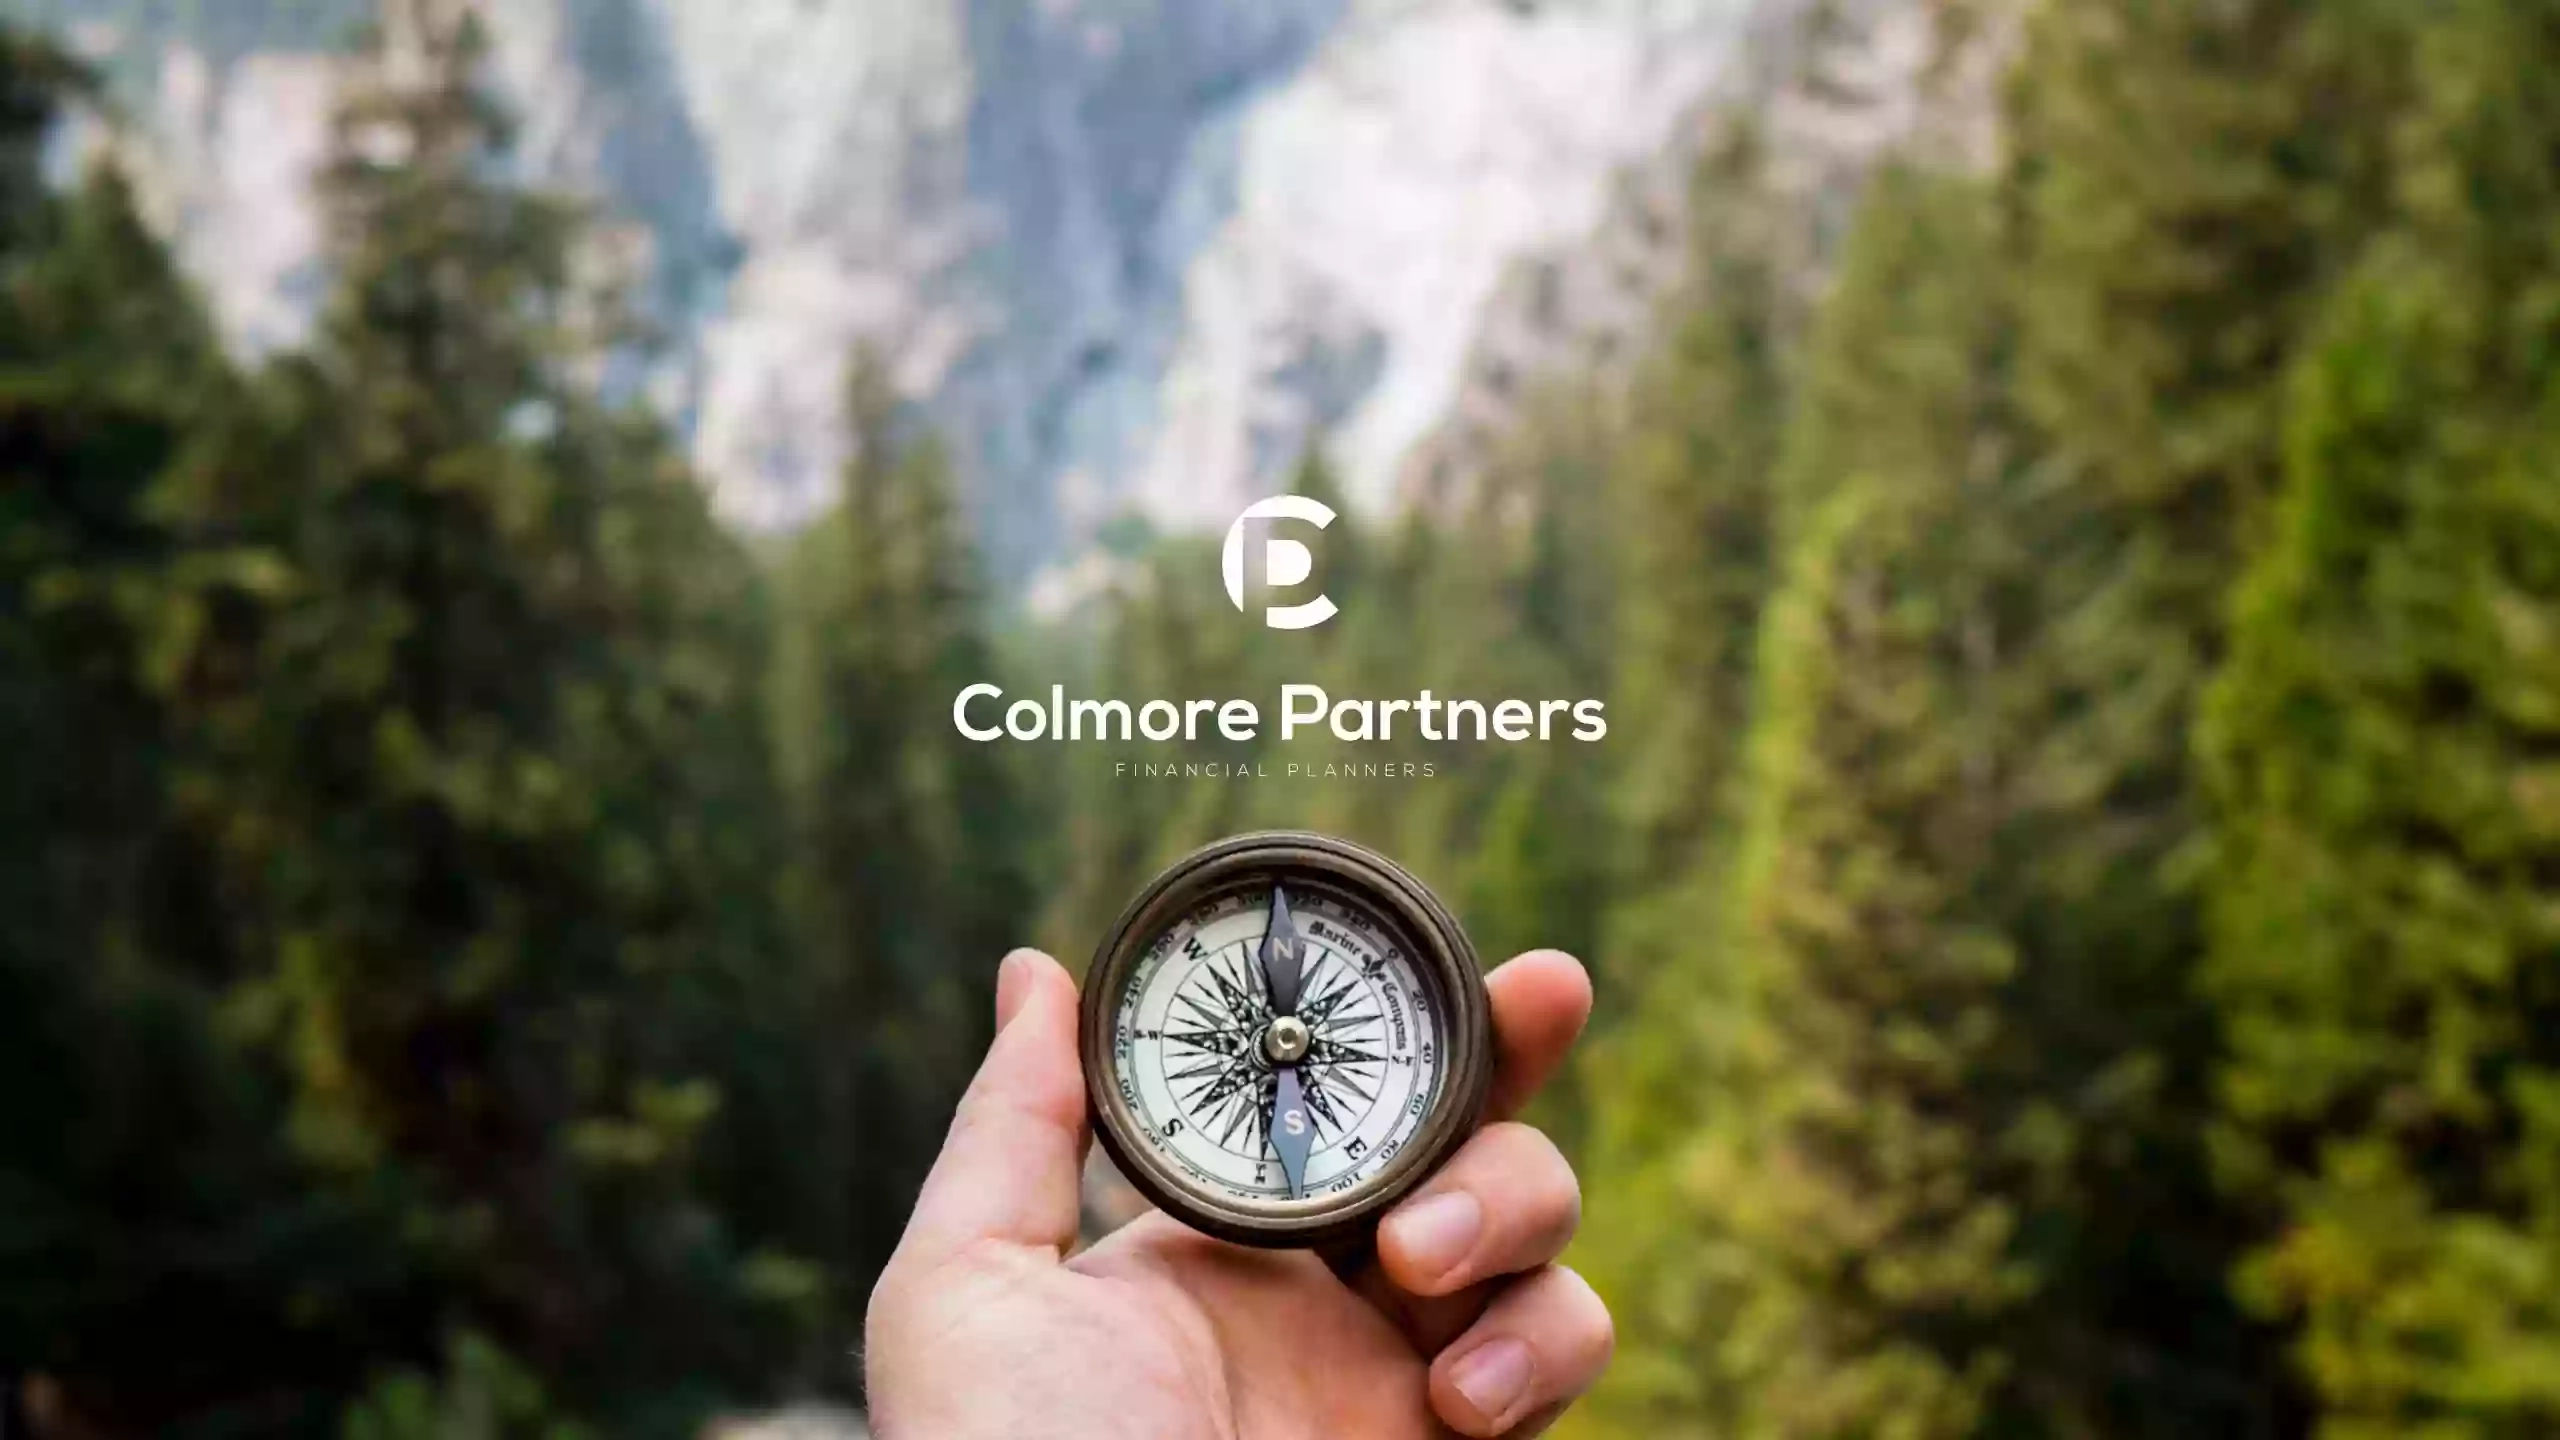 Colmore Partners Ltd